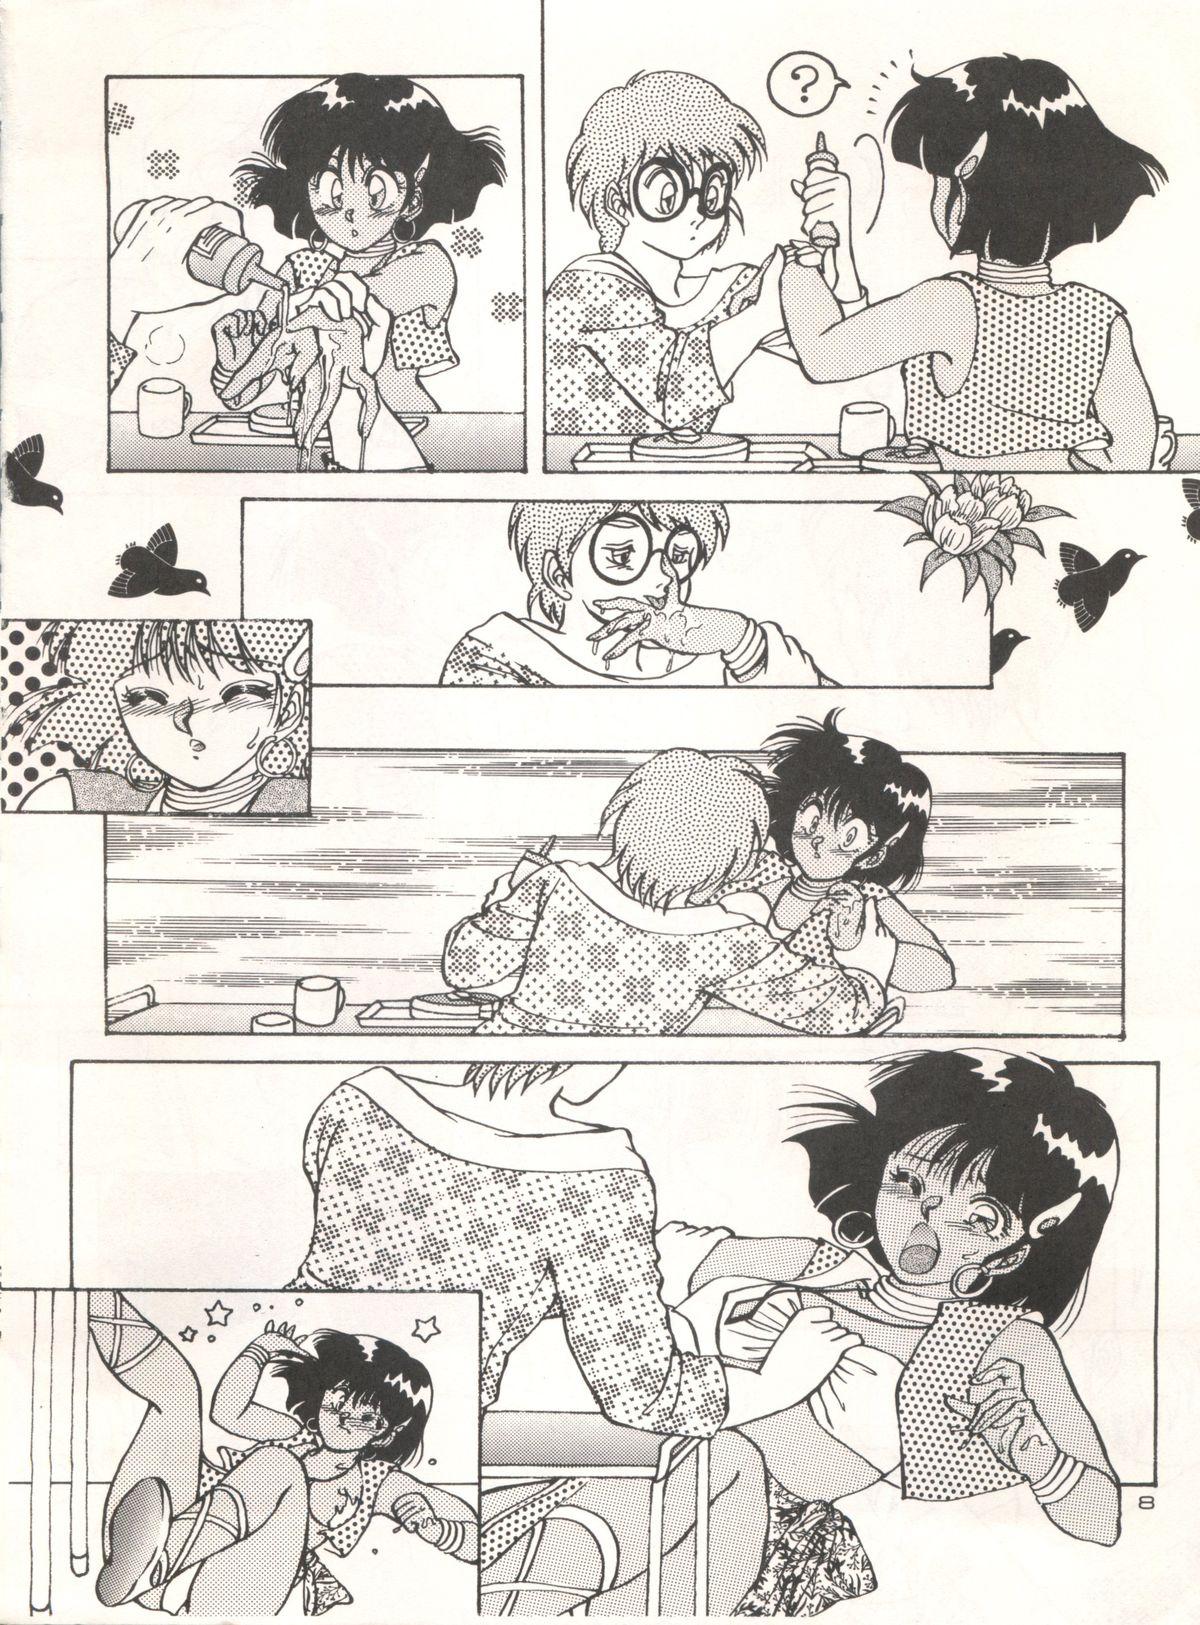 Balls Nadia Girls in Emerald Sea vol. 2 - Minies Club 23 - Fushigi no umi no nadia Naked - Page 8